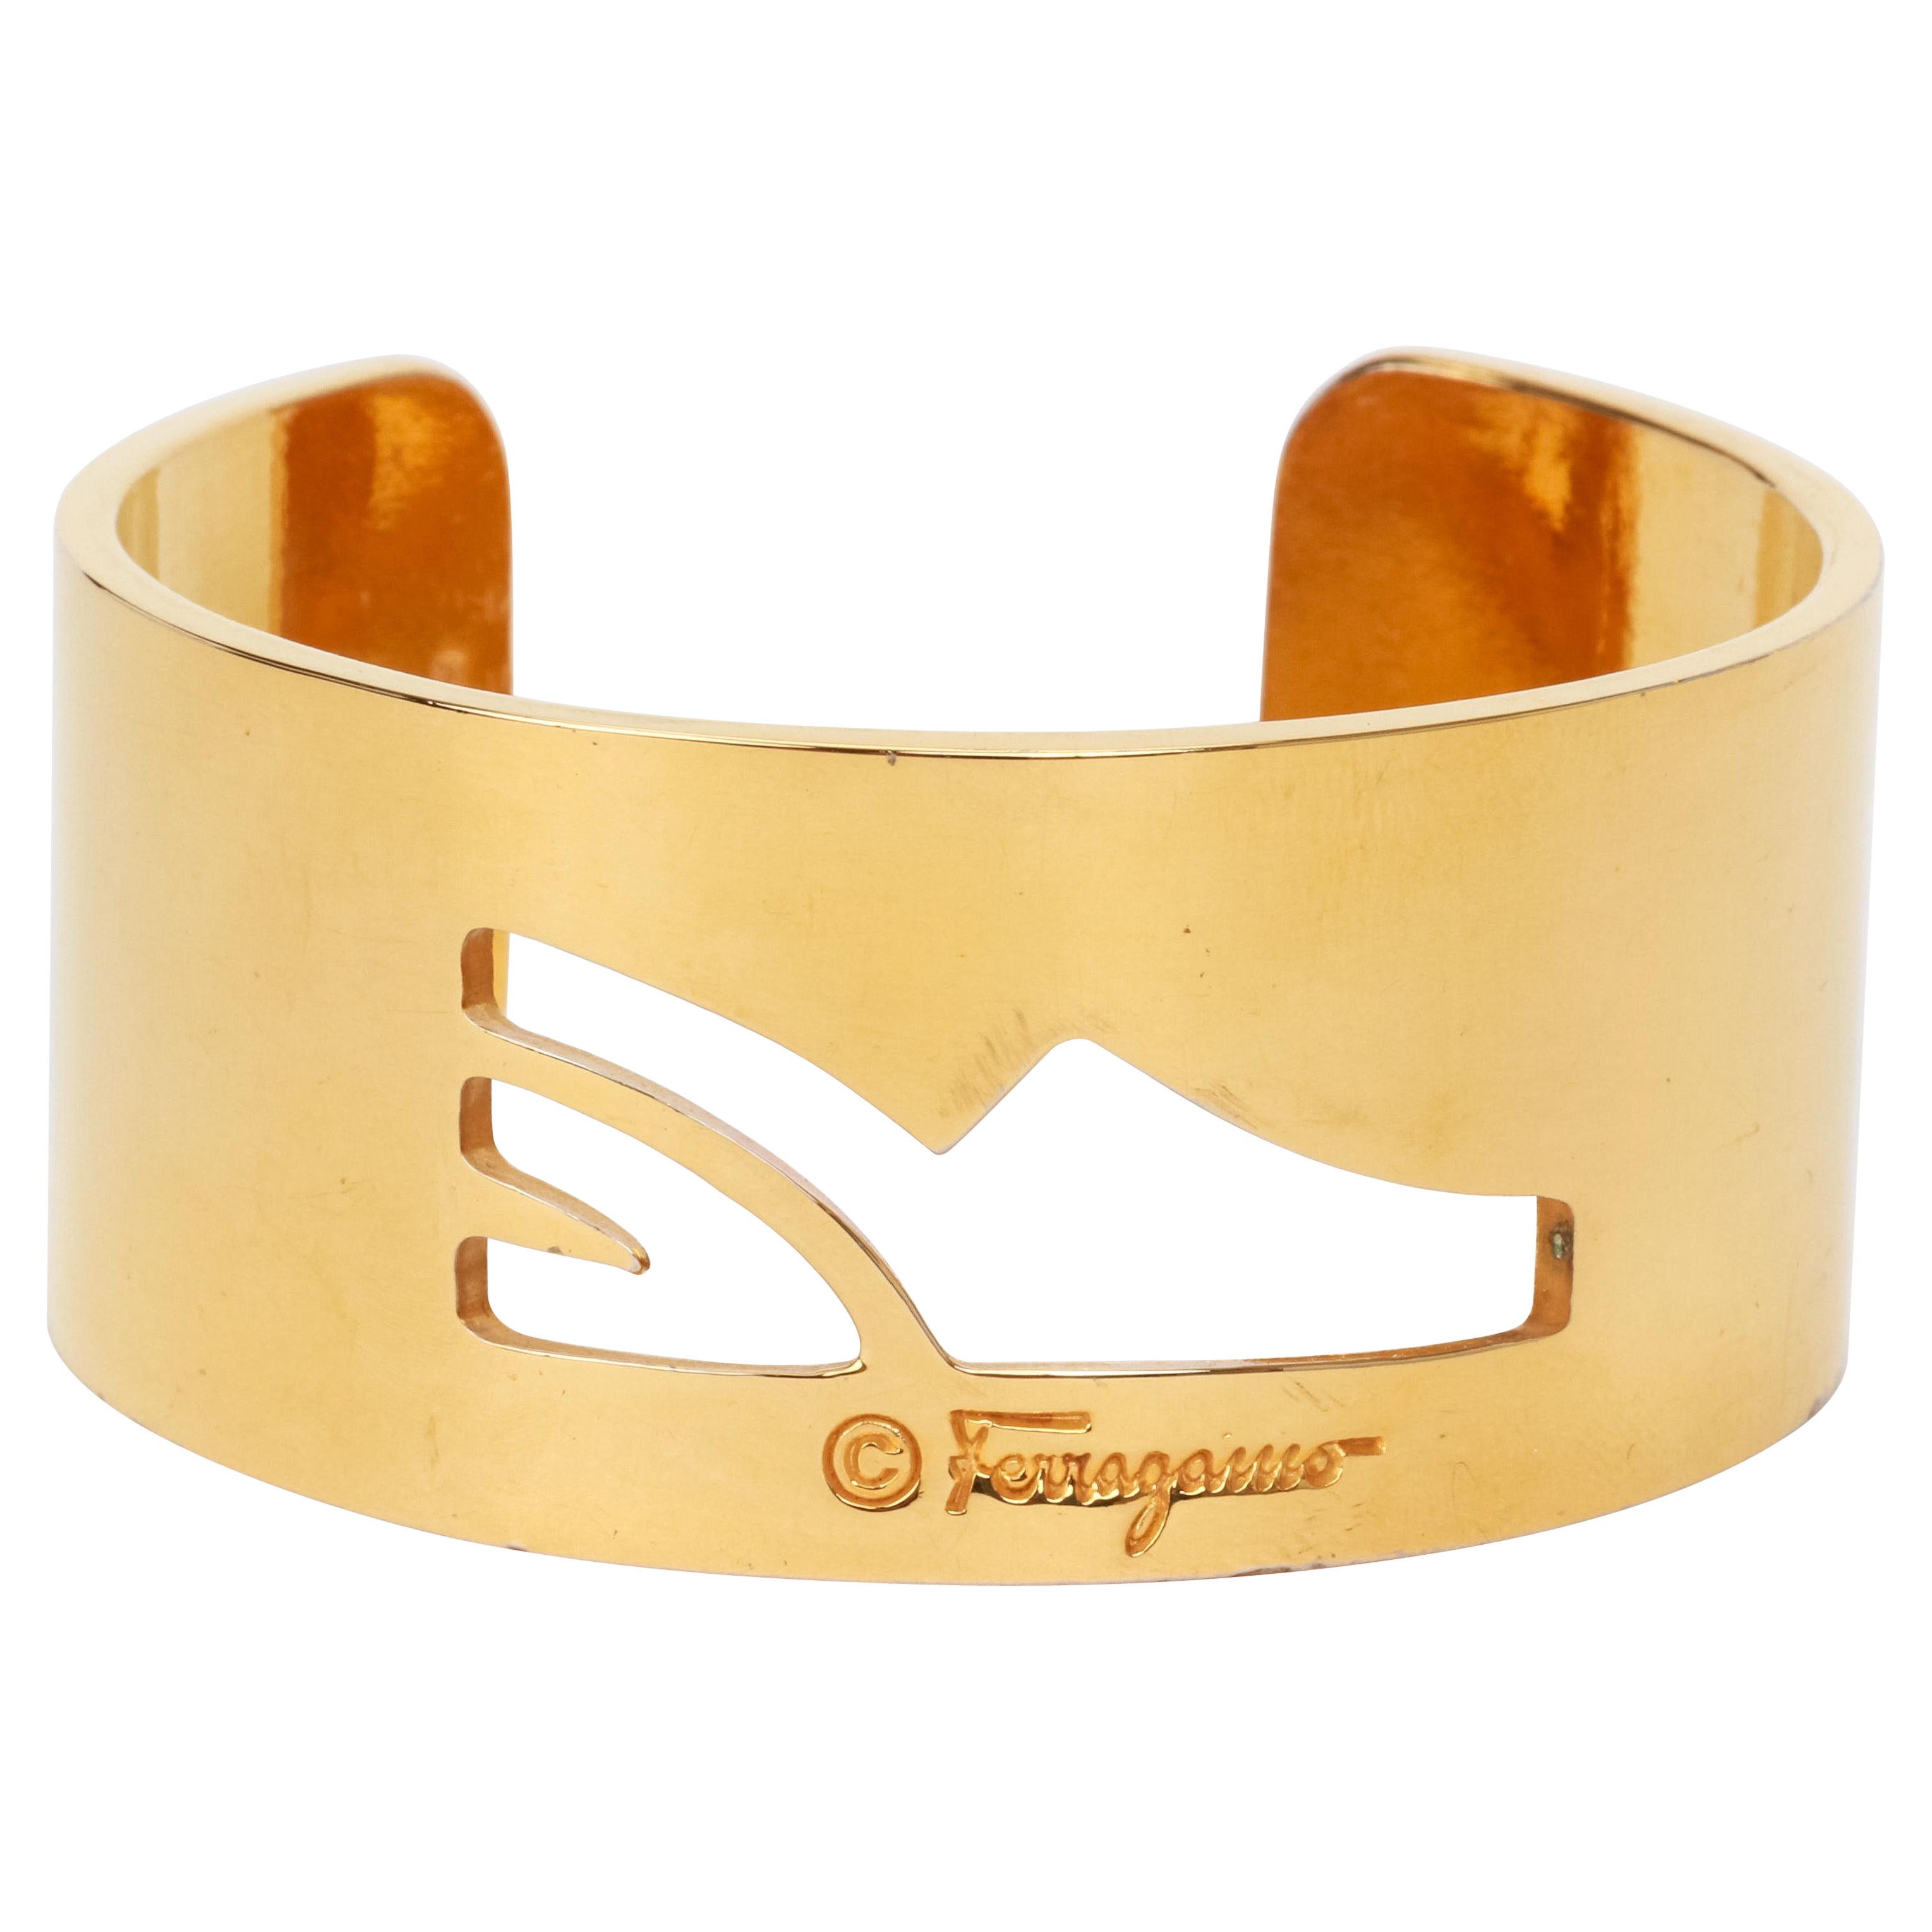 Vintage 1980's Ferragamo Gold Tone Cuff Bracelet Signed For Sale